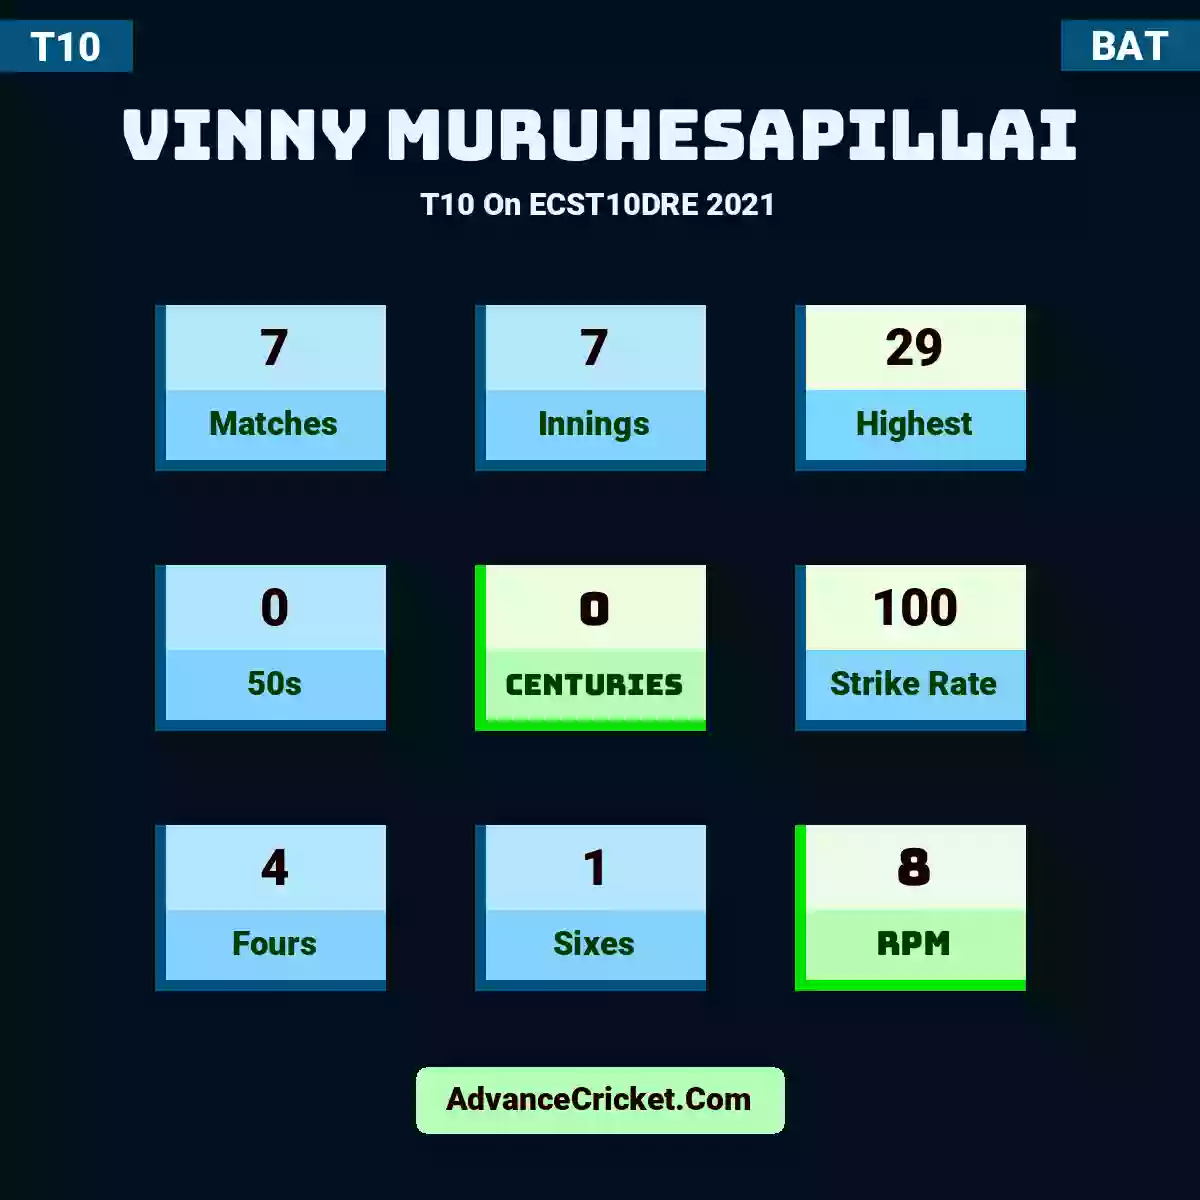 Vinny Muruhesapillai T10  On ECST10DRE 2021, Vinny Muruhesapillai played 7 matches, scored 29 runs as highest, 0 half-centuries, and 0 centuries, with a strike rate of 100. V.Muruhesapillai hit 4 fours and 1 sixes, with an RPM of 8.